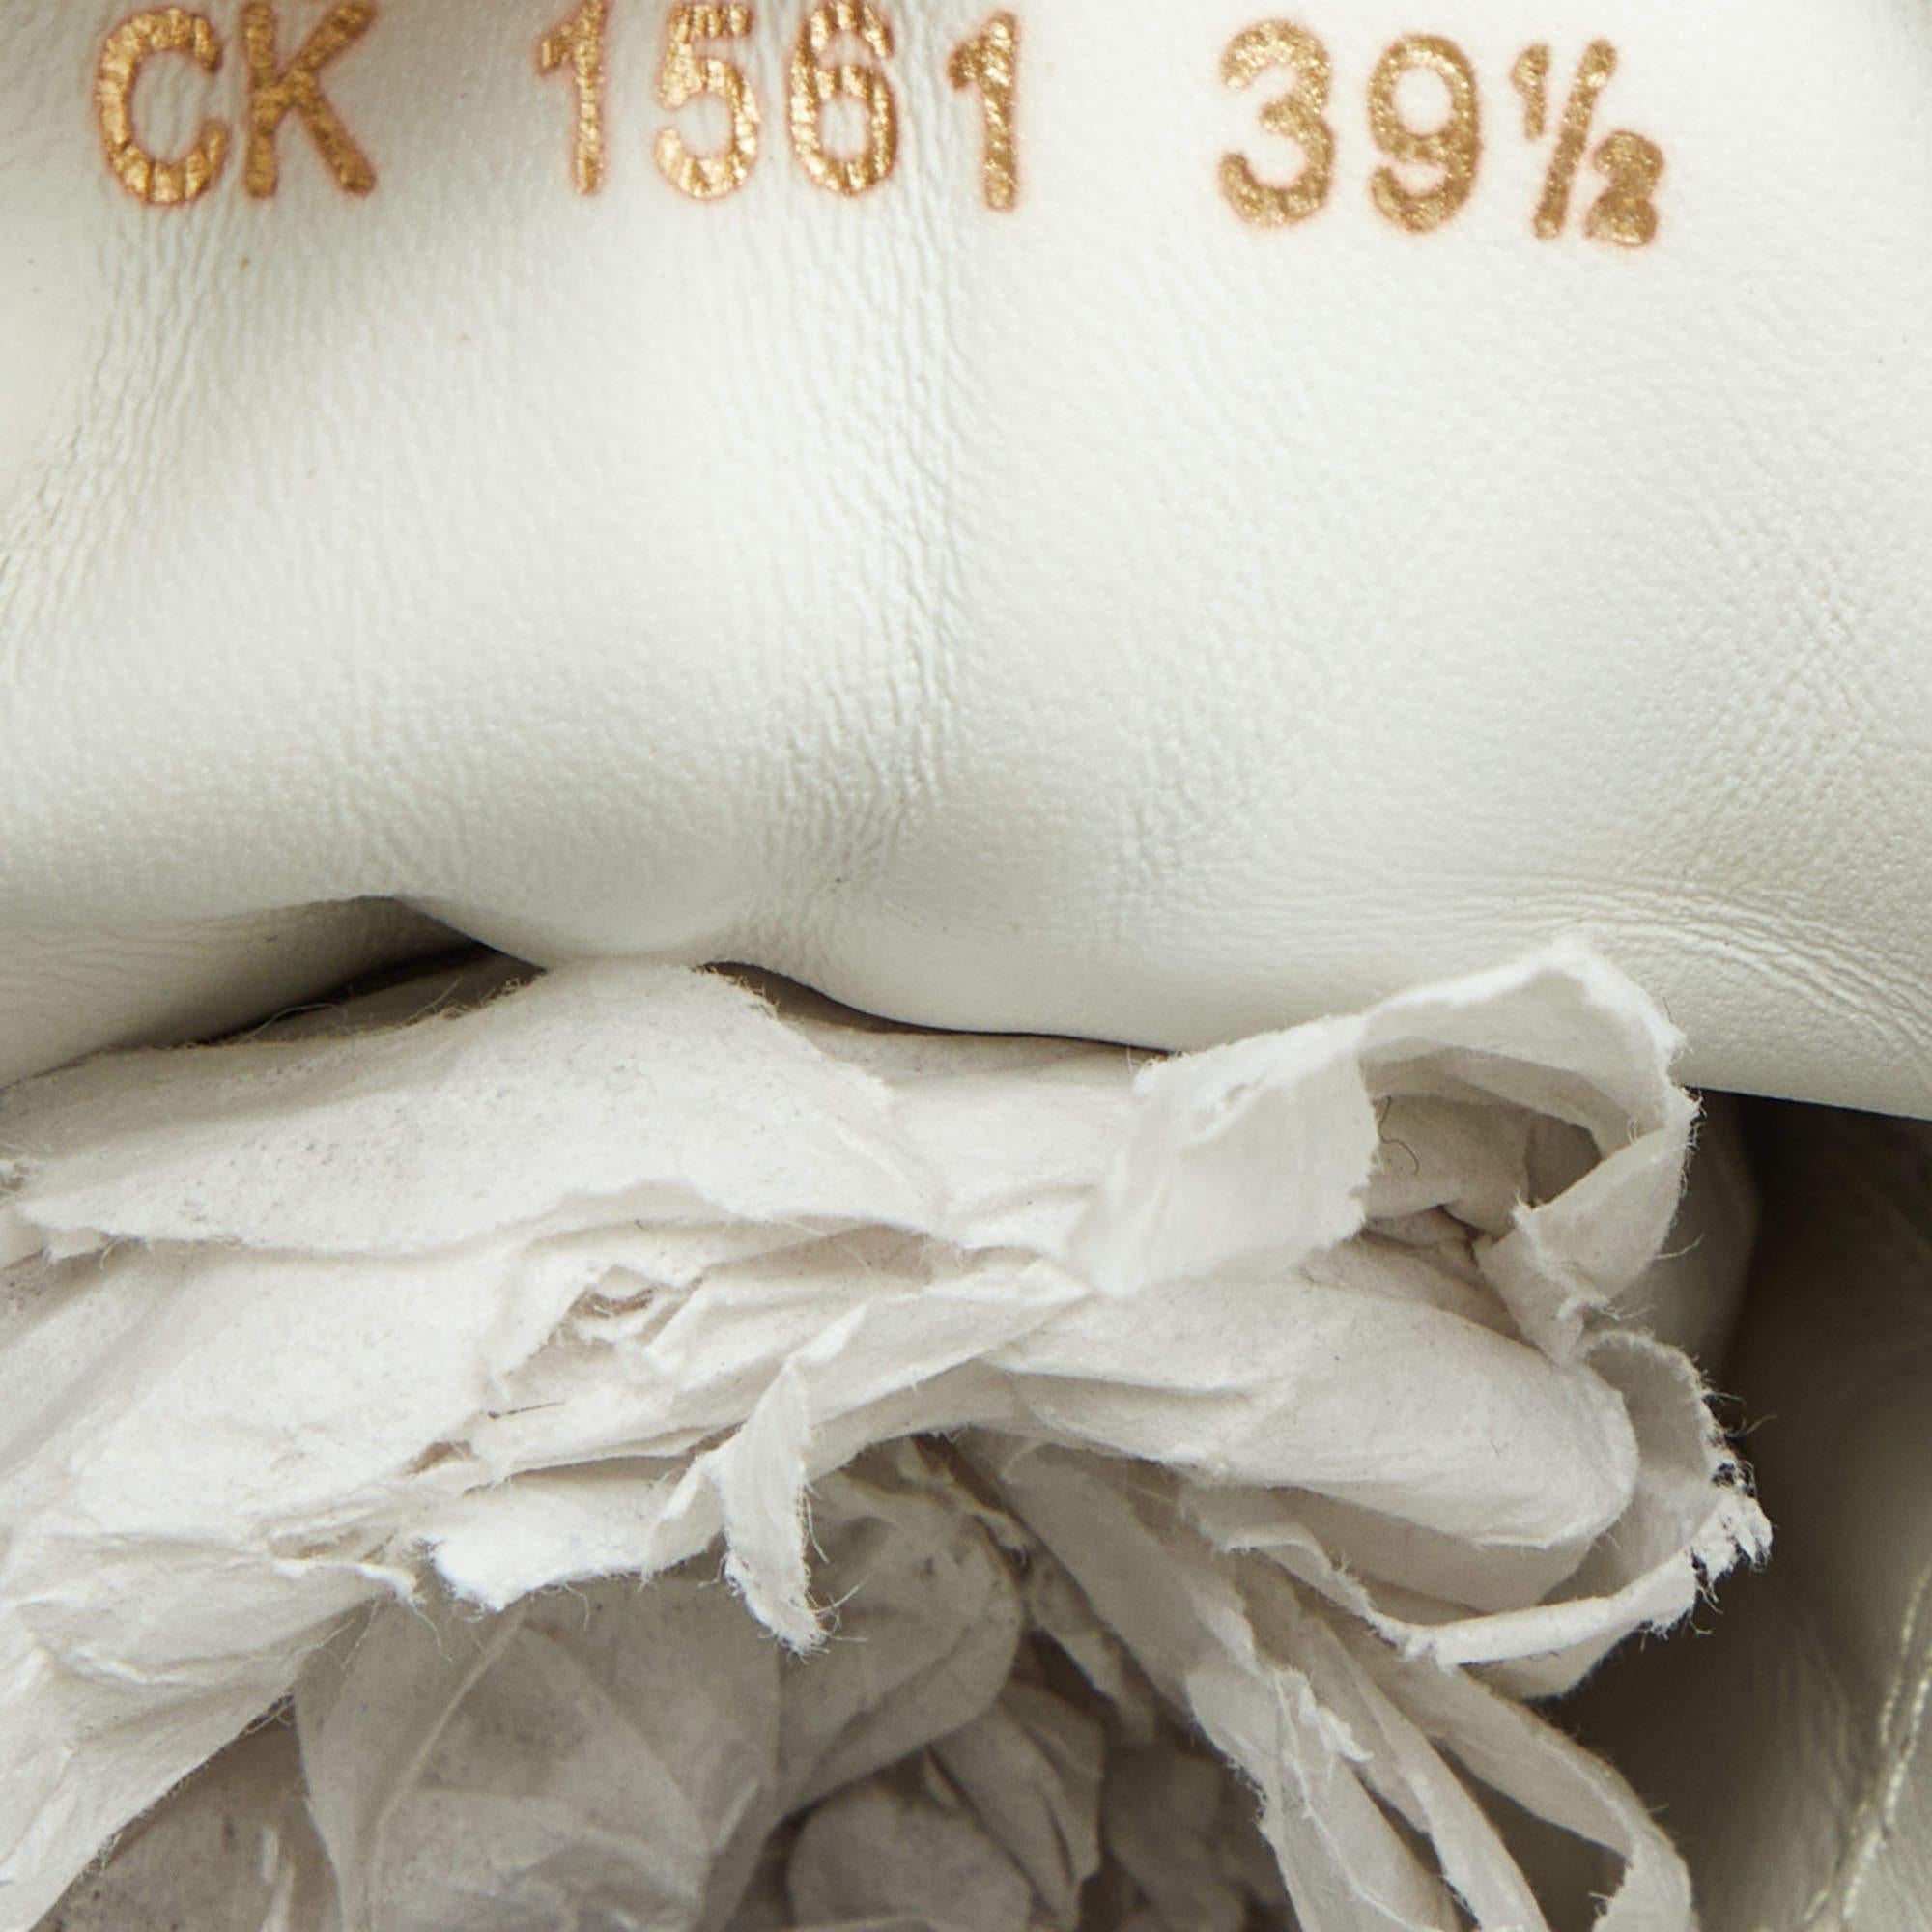 Women's Dolce & Gabbana White Leather Portofino Heart Low Top Sneakers Size 39.5